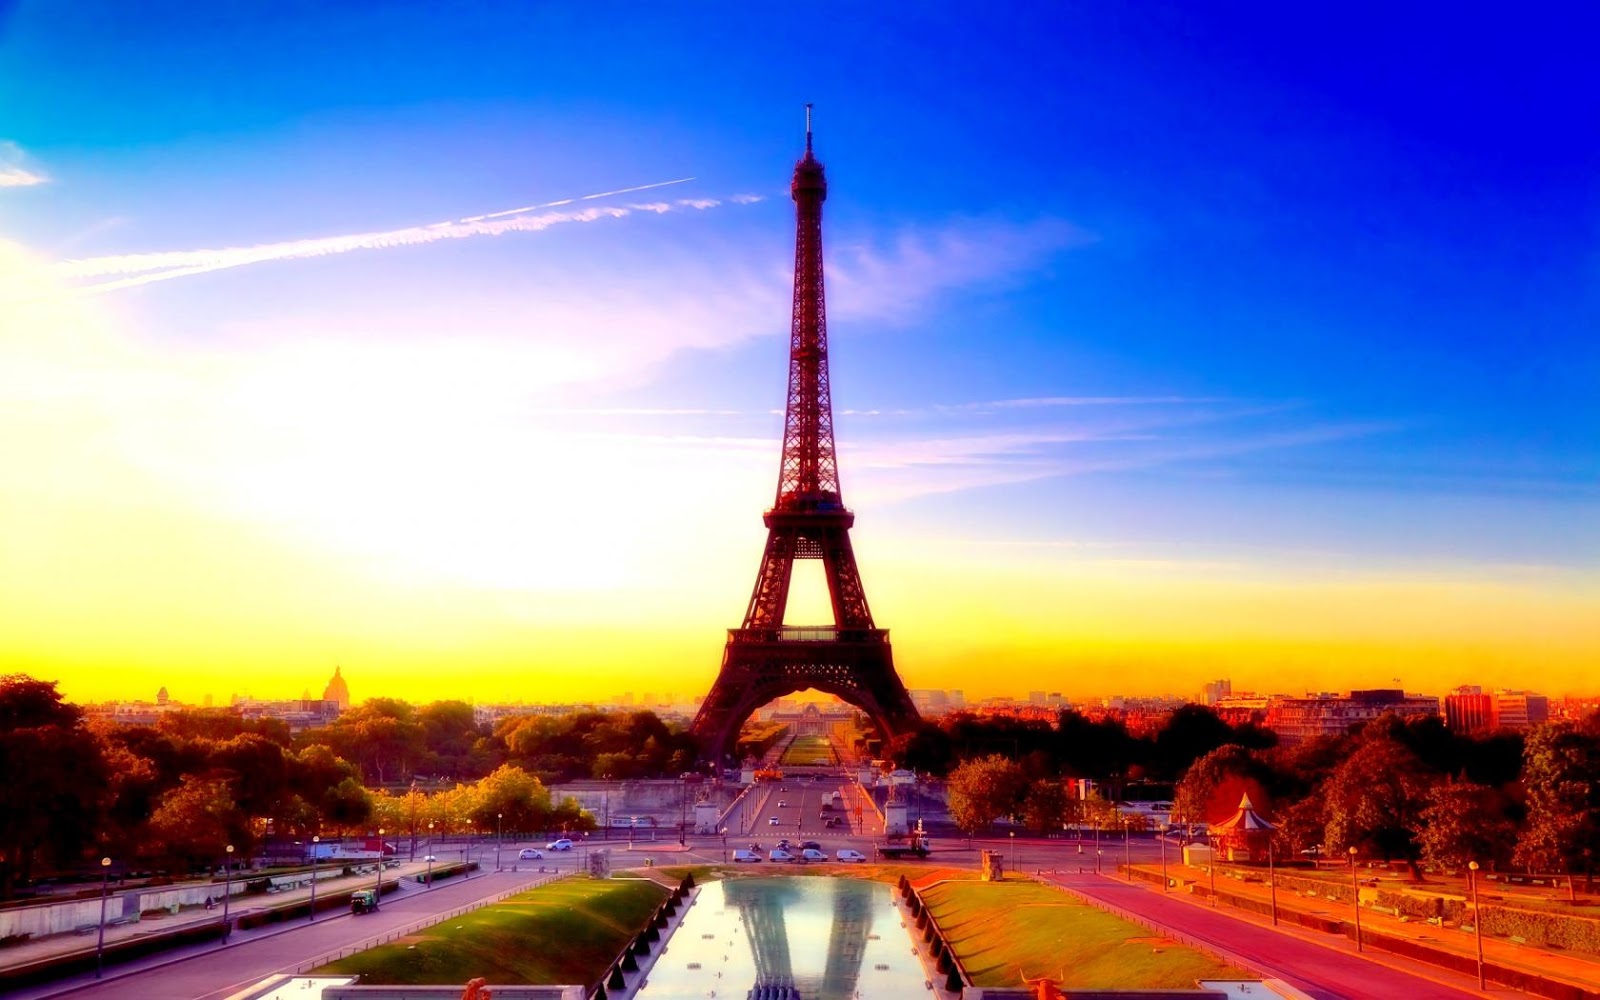 47+] Eiffel Tower Paris France Wallpaper - WallpaperSafari